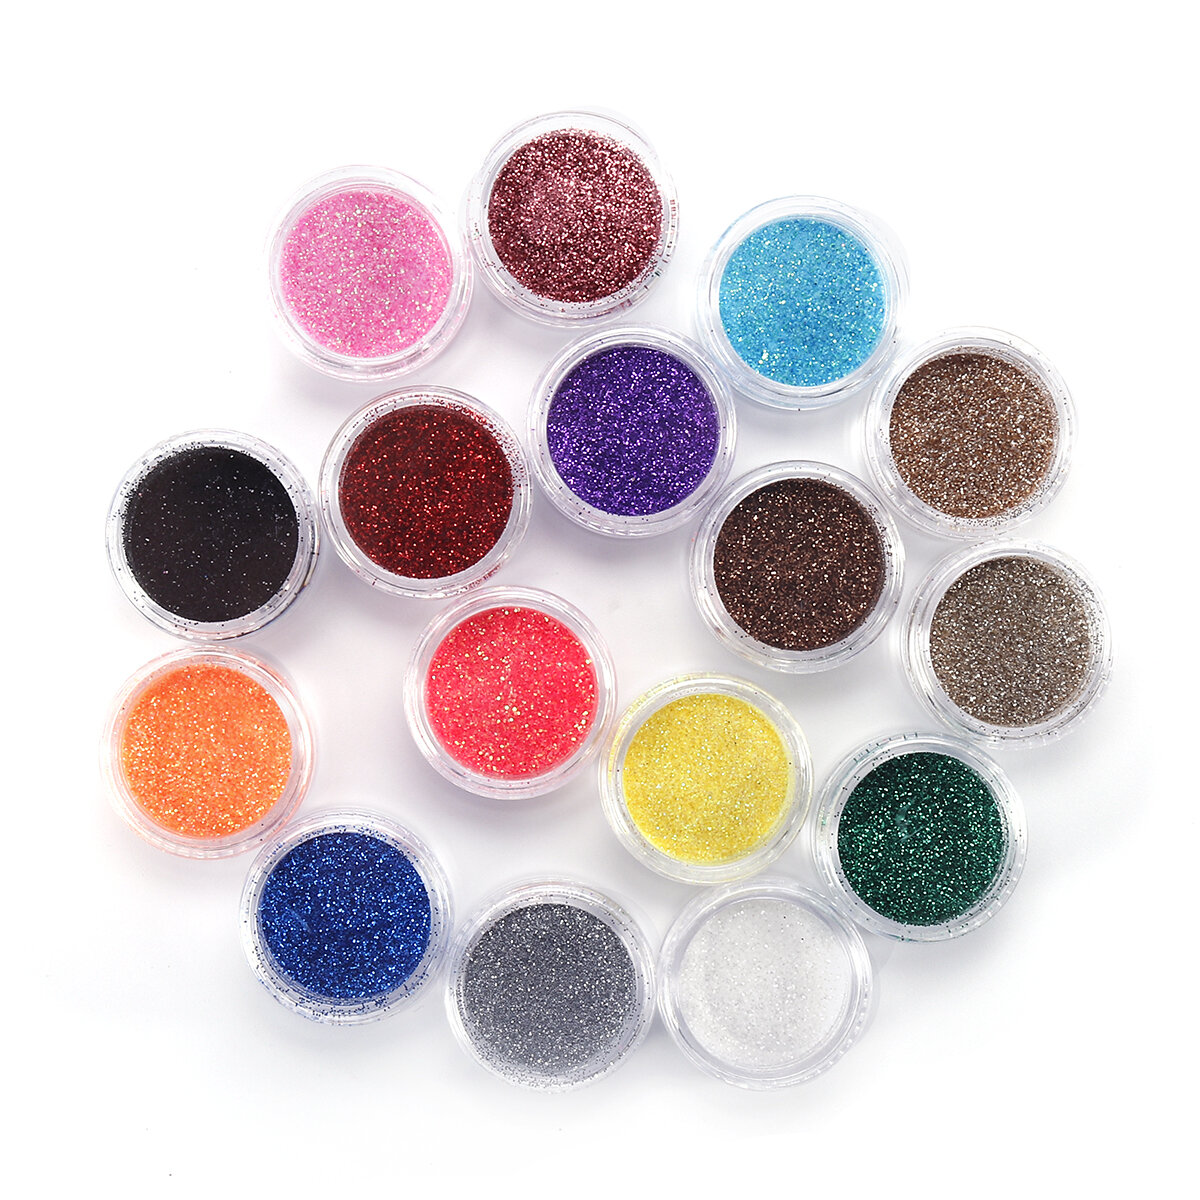 

16 Mixed Colors Glitter Powder Eyeshadow Makeup Smoked Eye Shadow Cosmetics Set